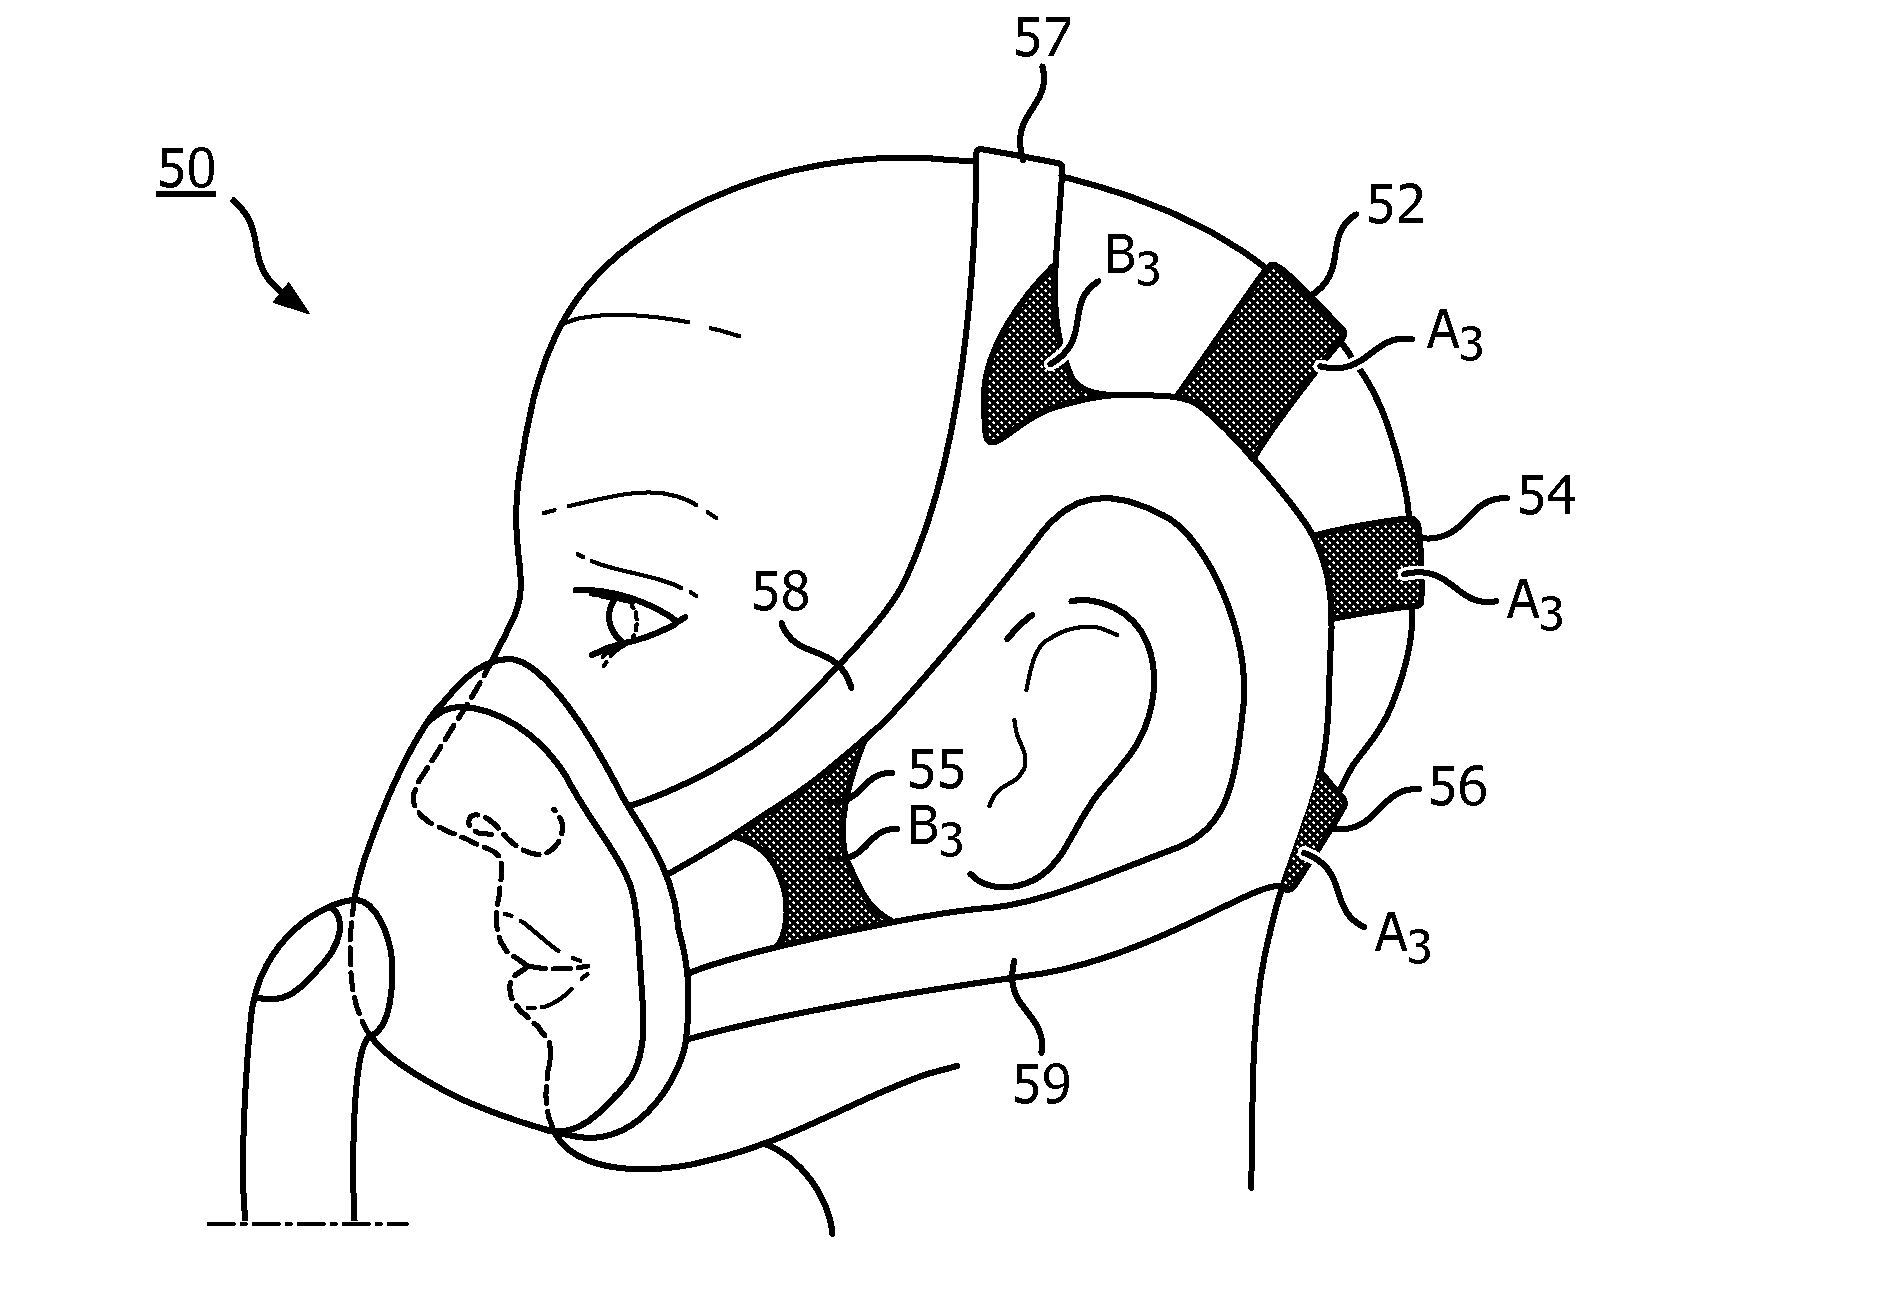 Multiple-material, single-plane-headgear